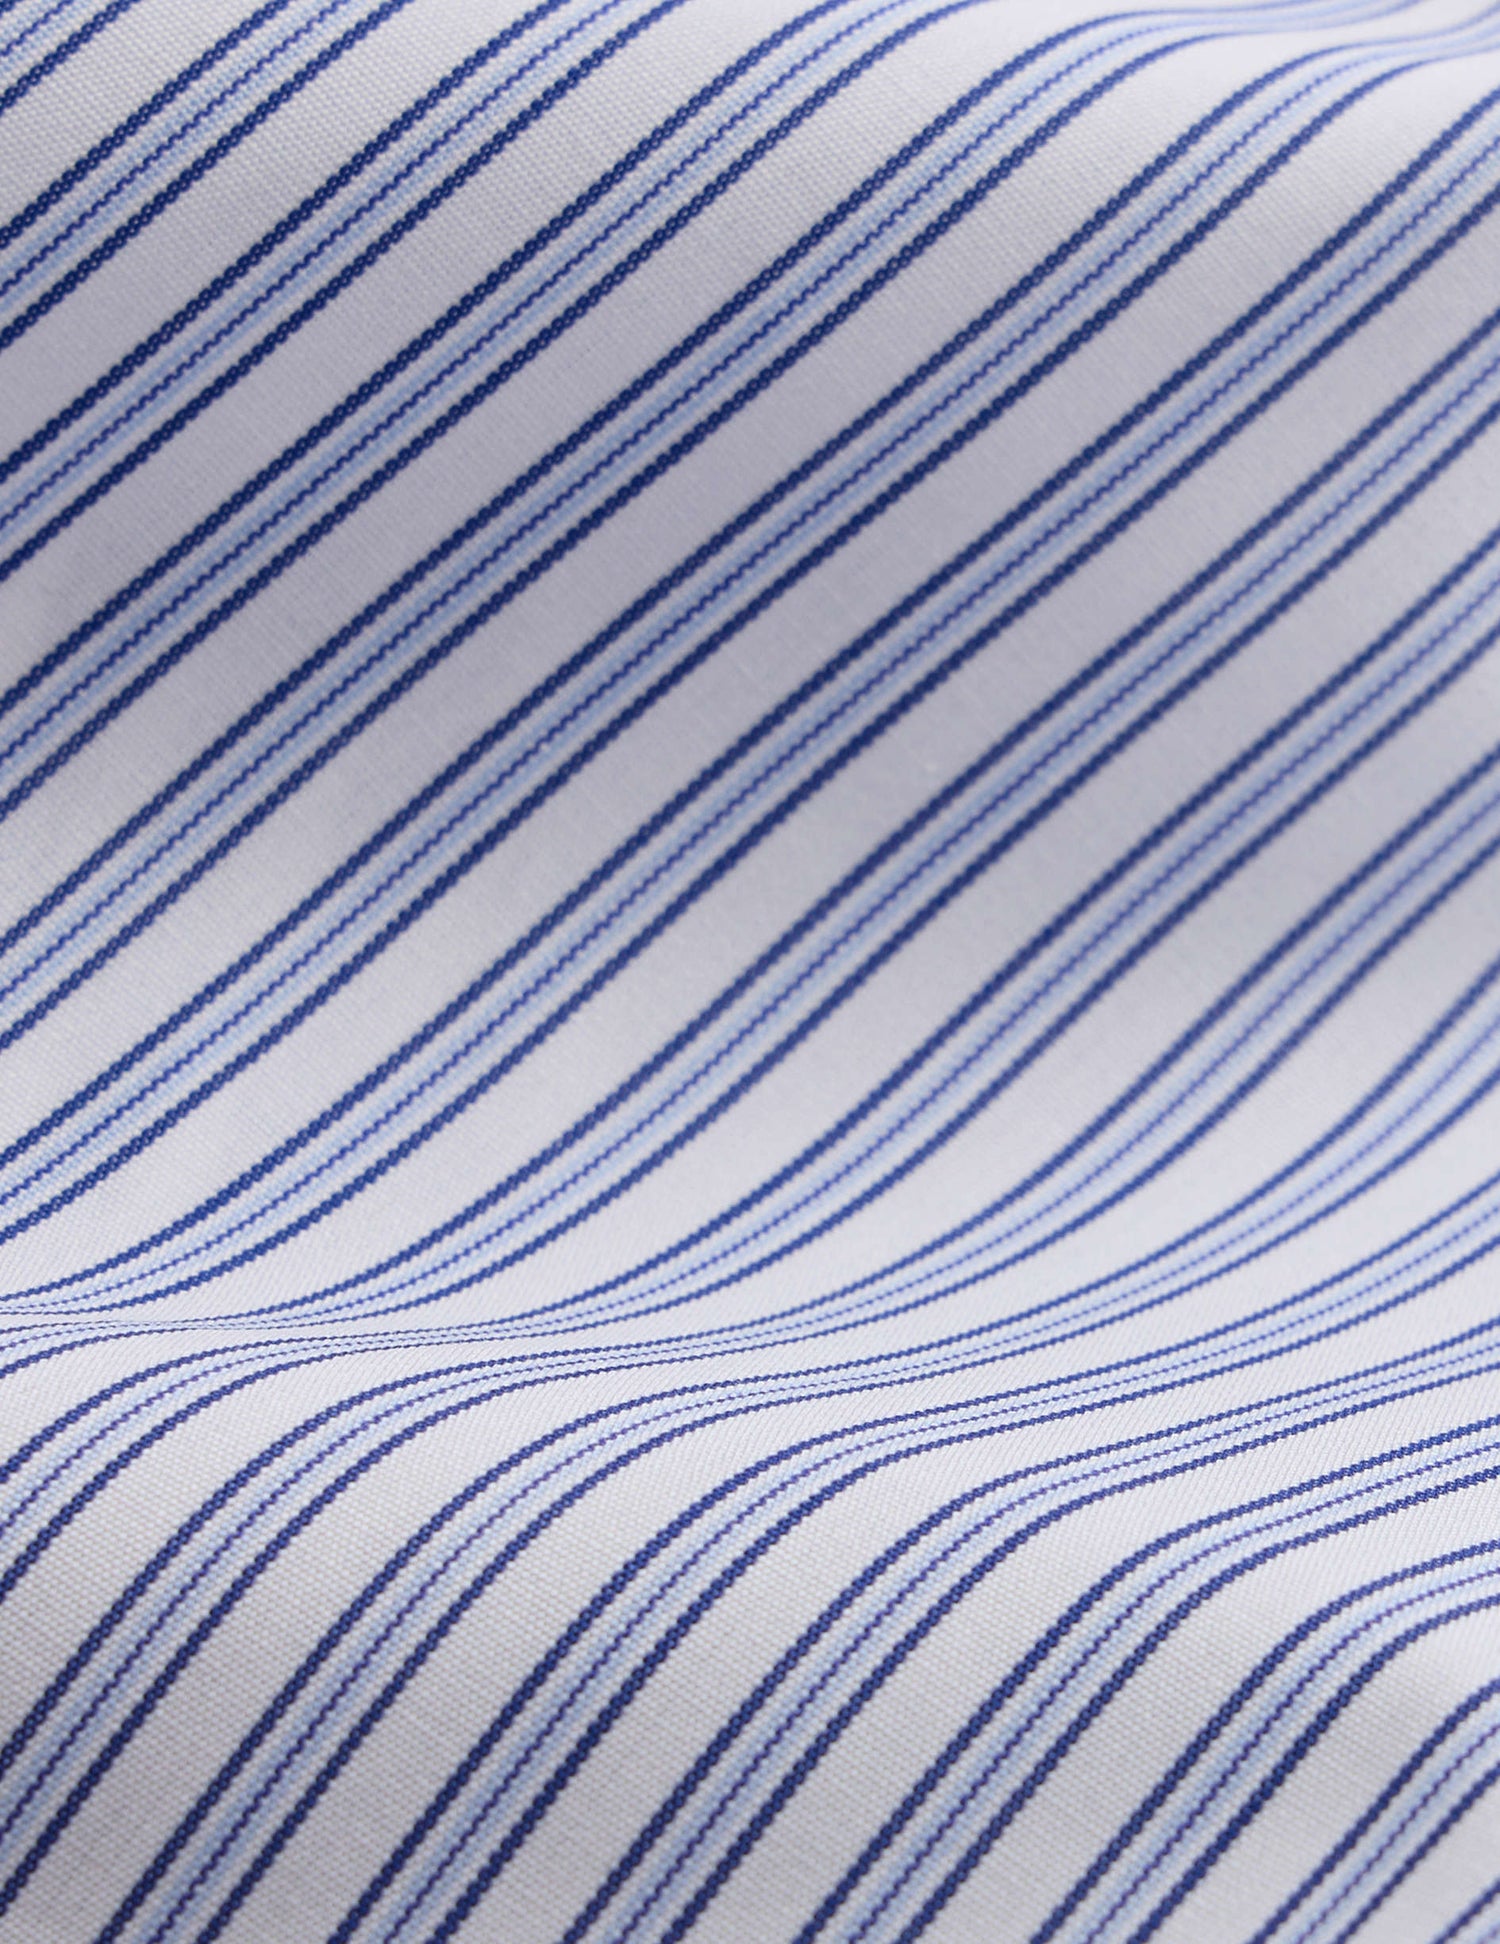 Chemise Semi-ajustée rayée bleu marine - Popeline - Col Américain#2